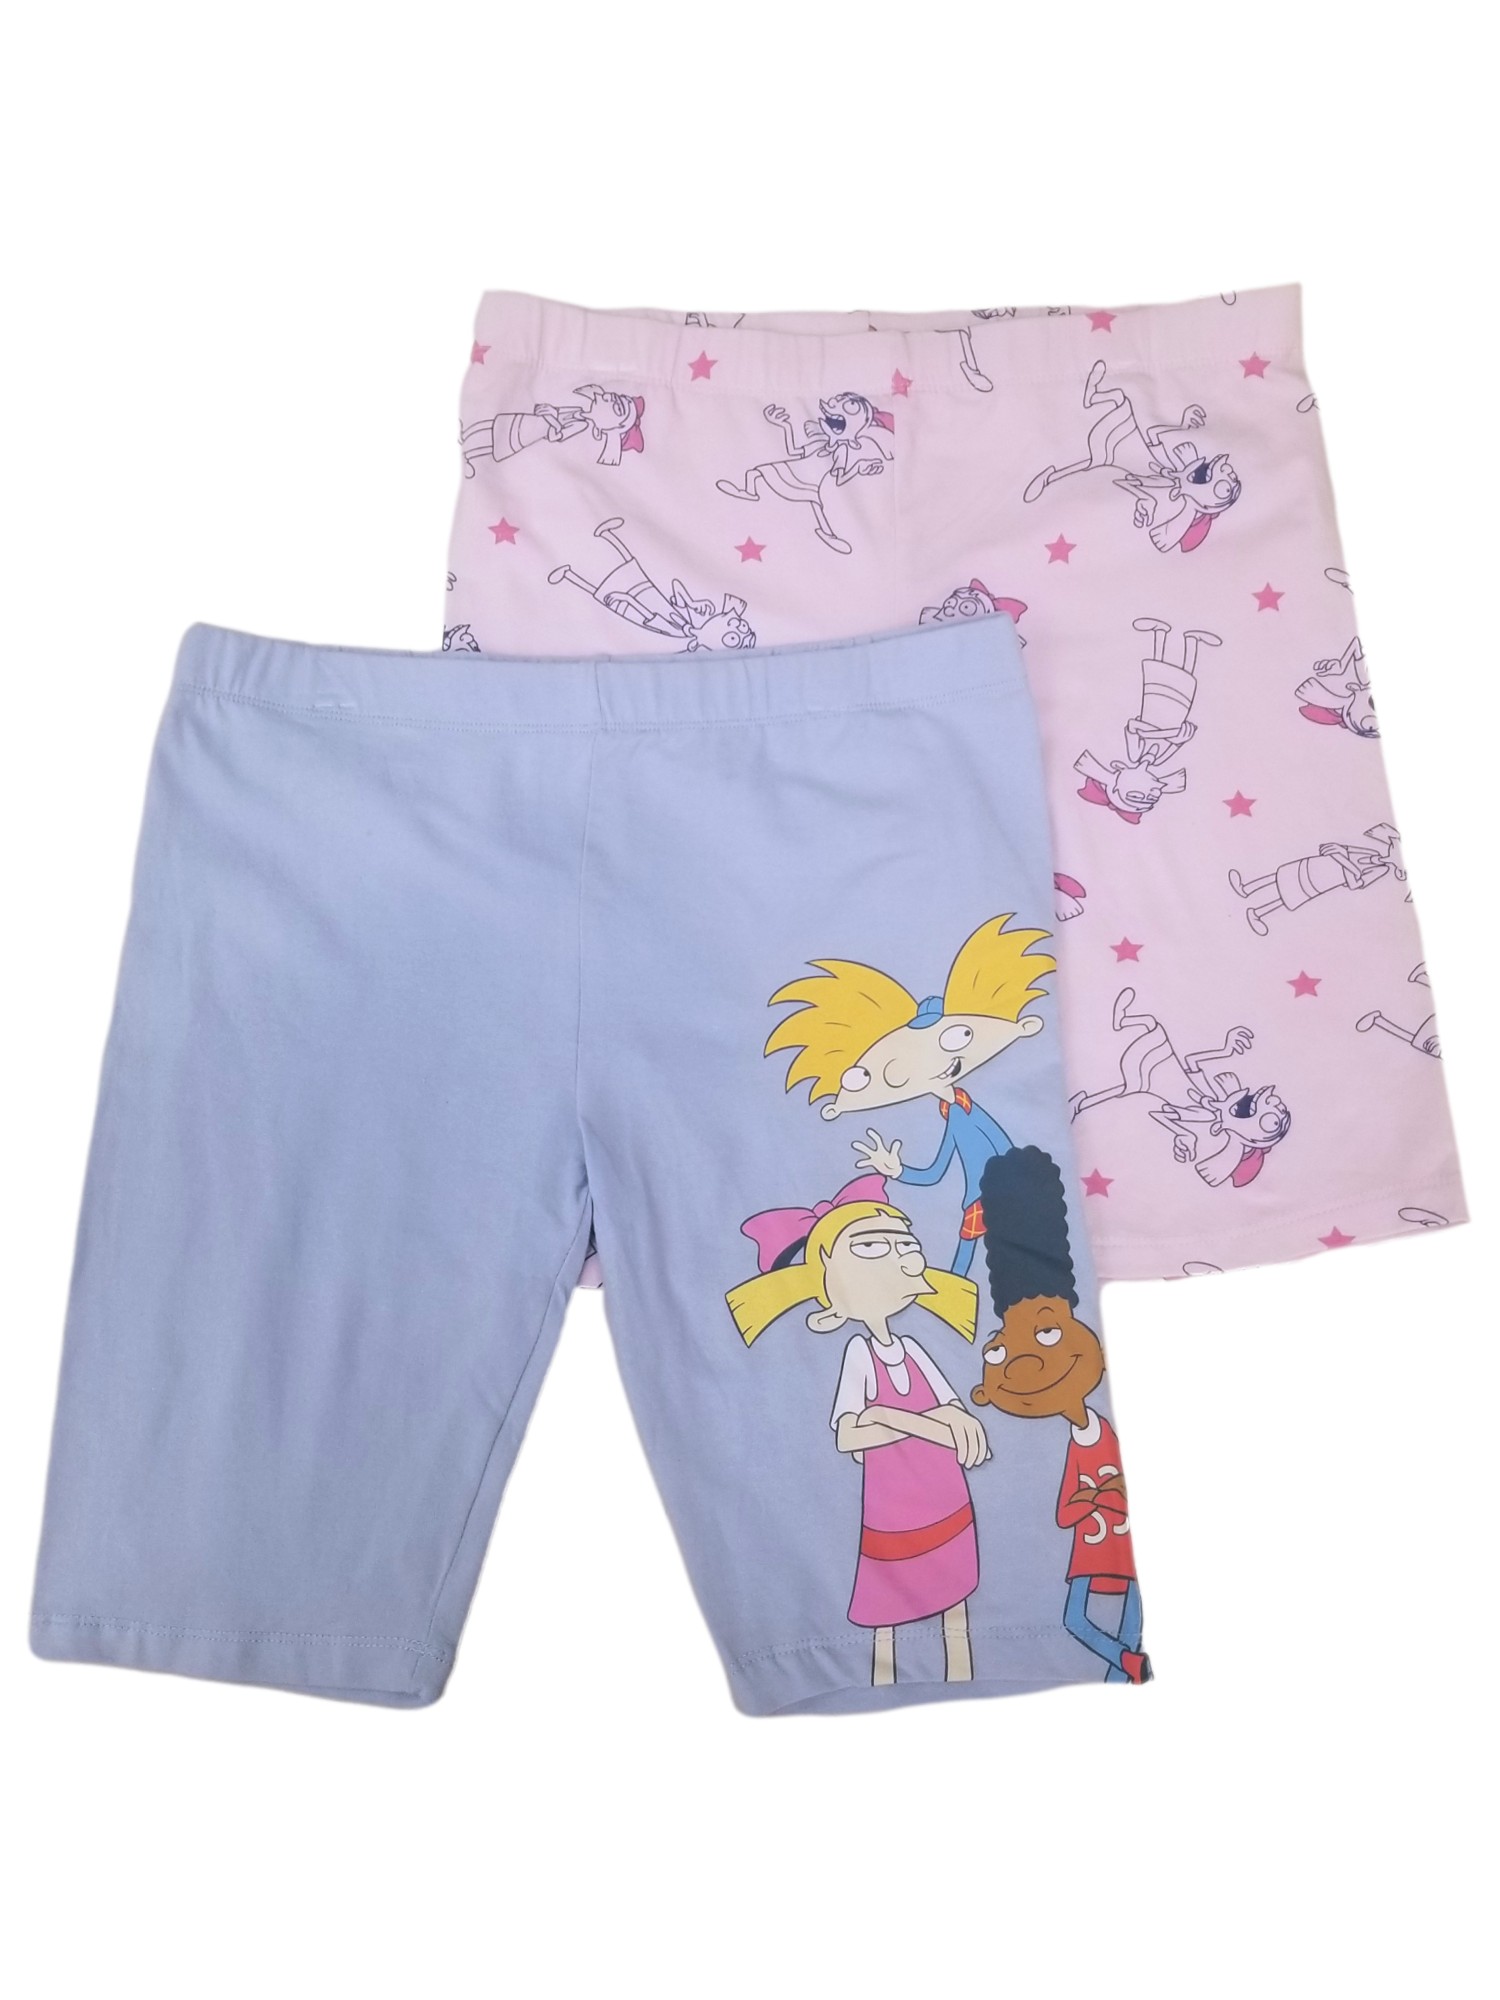 Nickelodeon Girls Nickelodeon Hey Arnold! Pink & Blue 2-Pack Bike Shorts Set